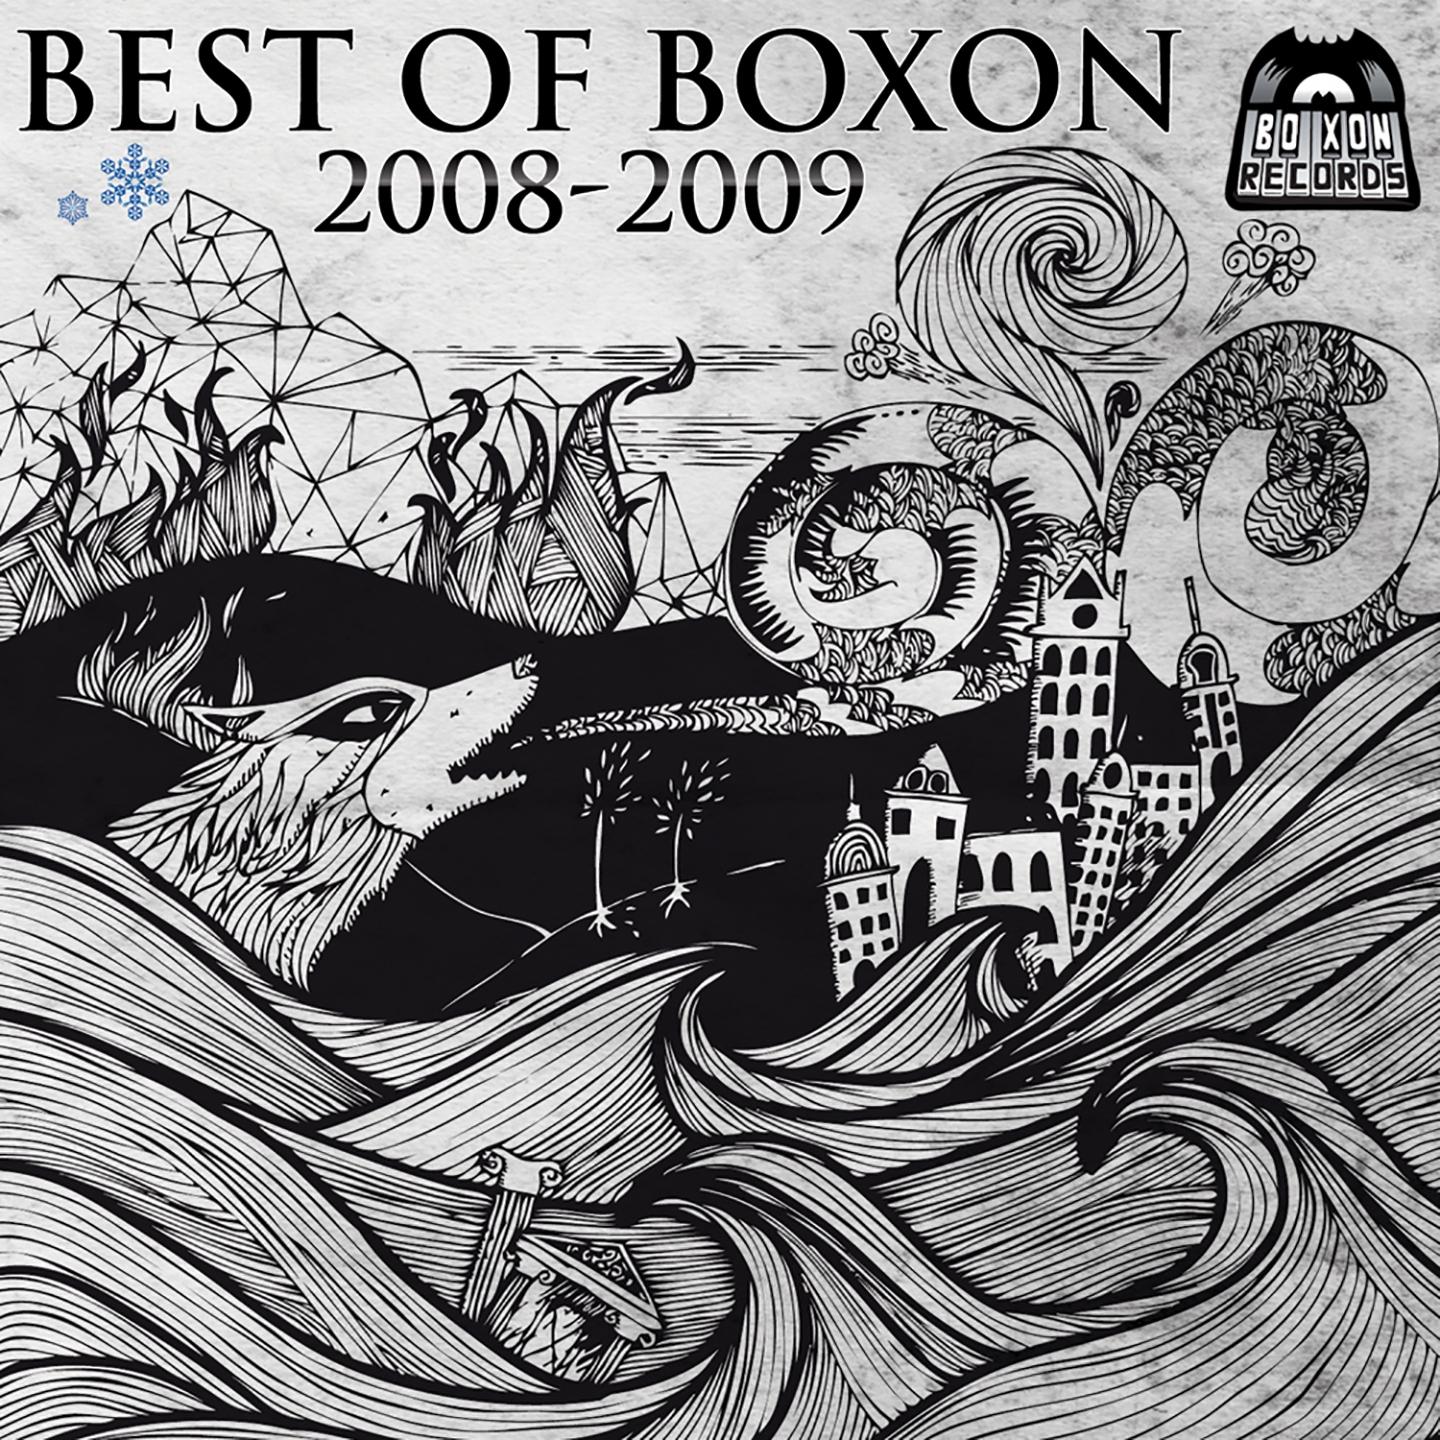 Best of Boxon Records 2008-2009